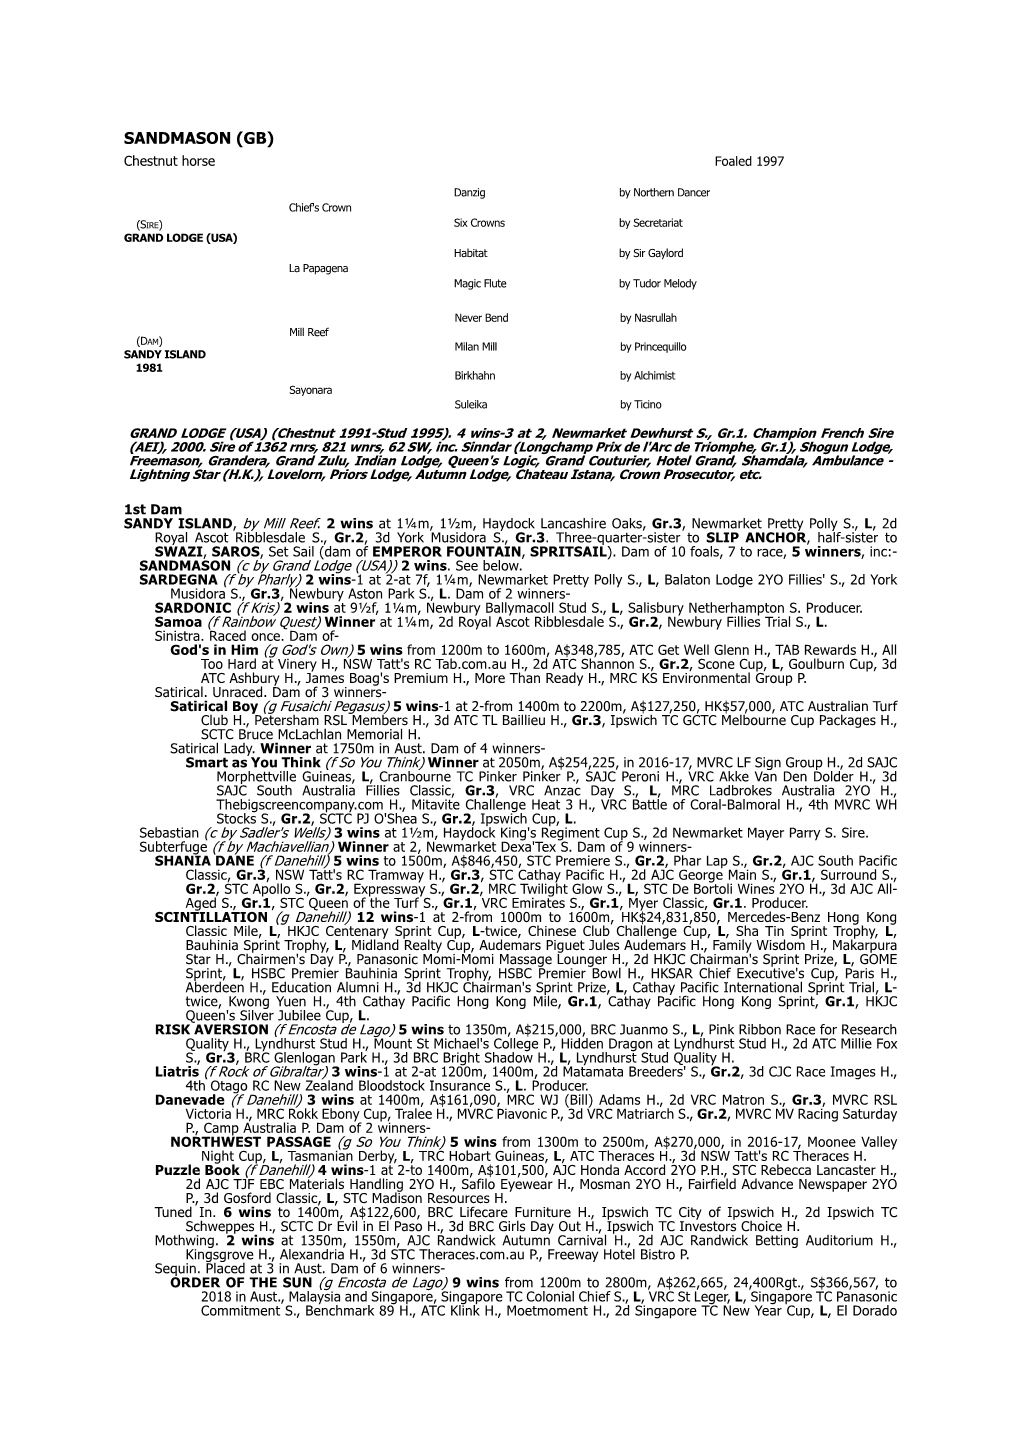 SANDMASON (GB) Chestnut Horse Foaled 1997